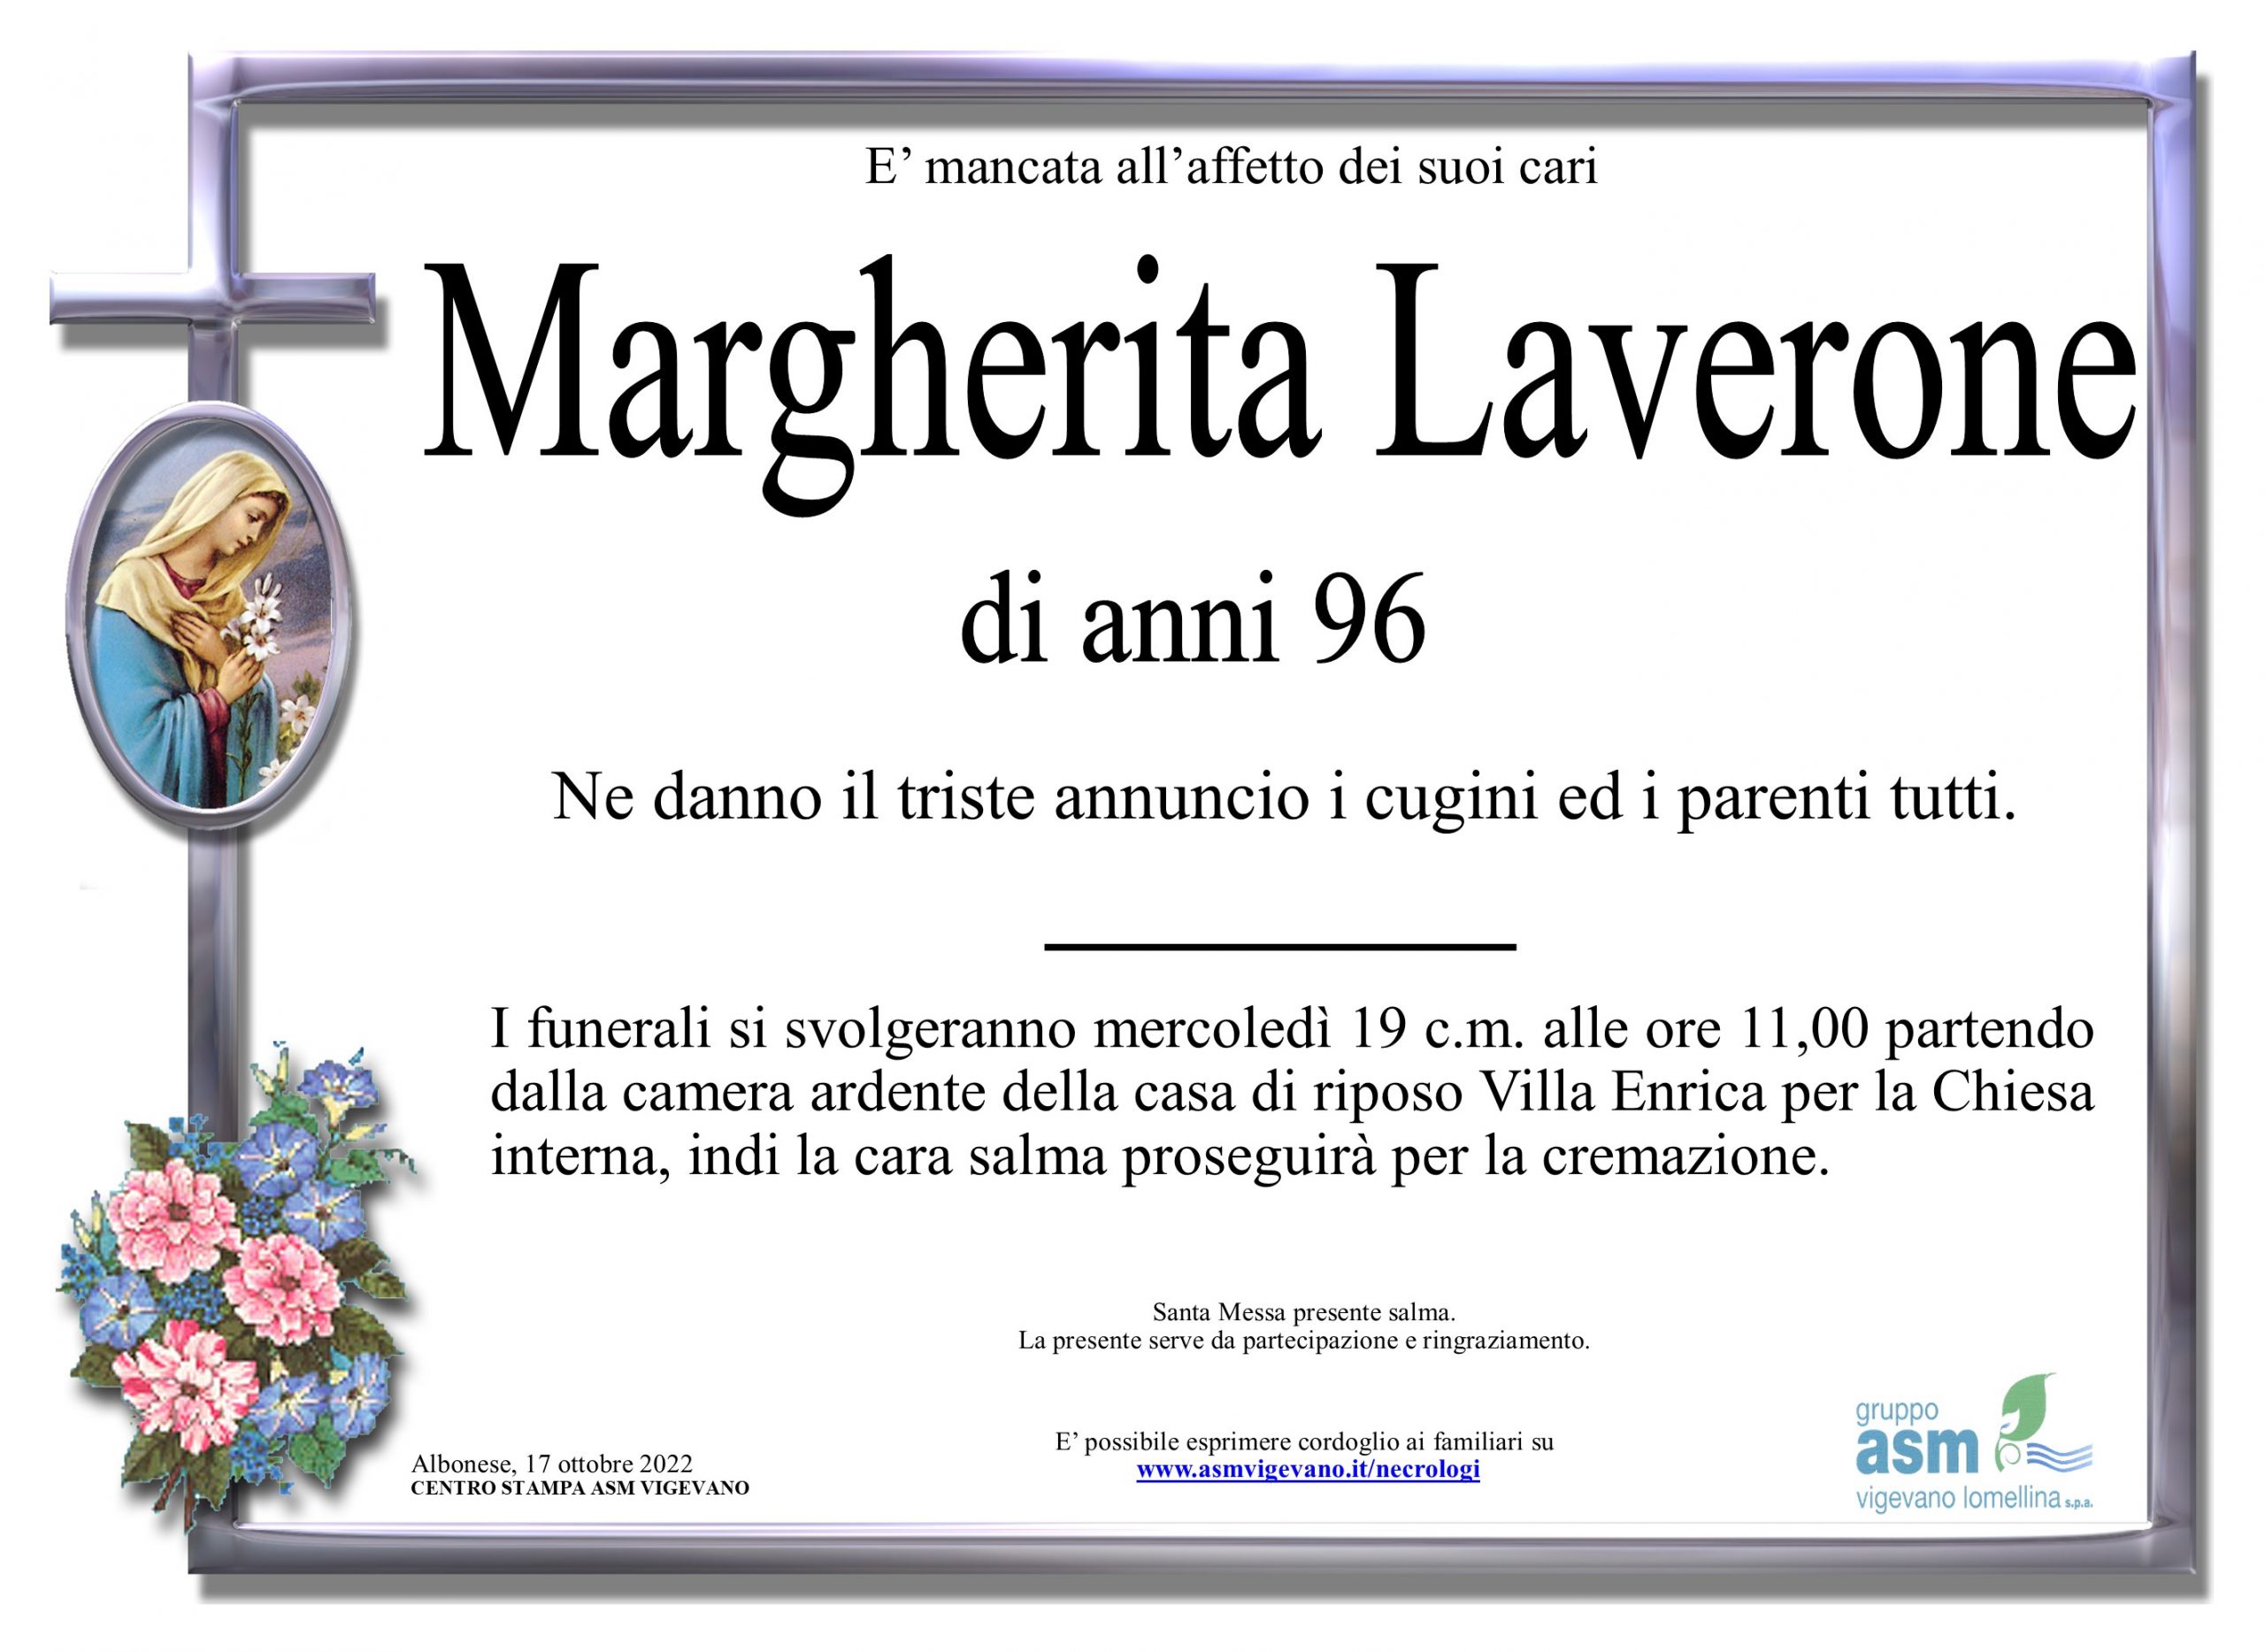 Margherita Laverone